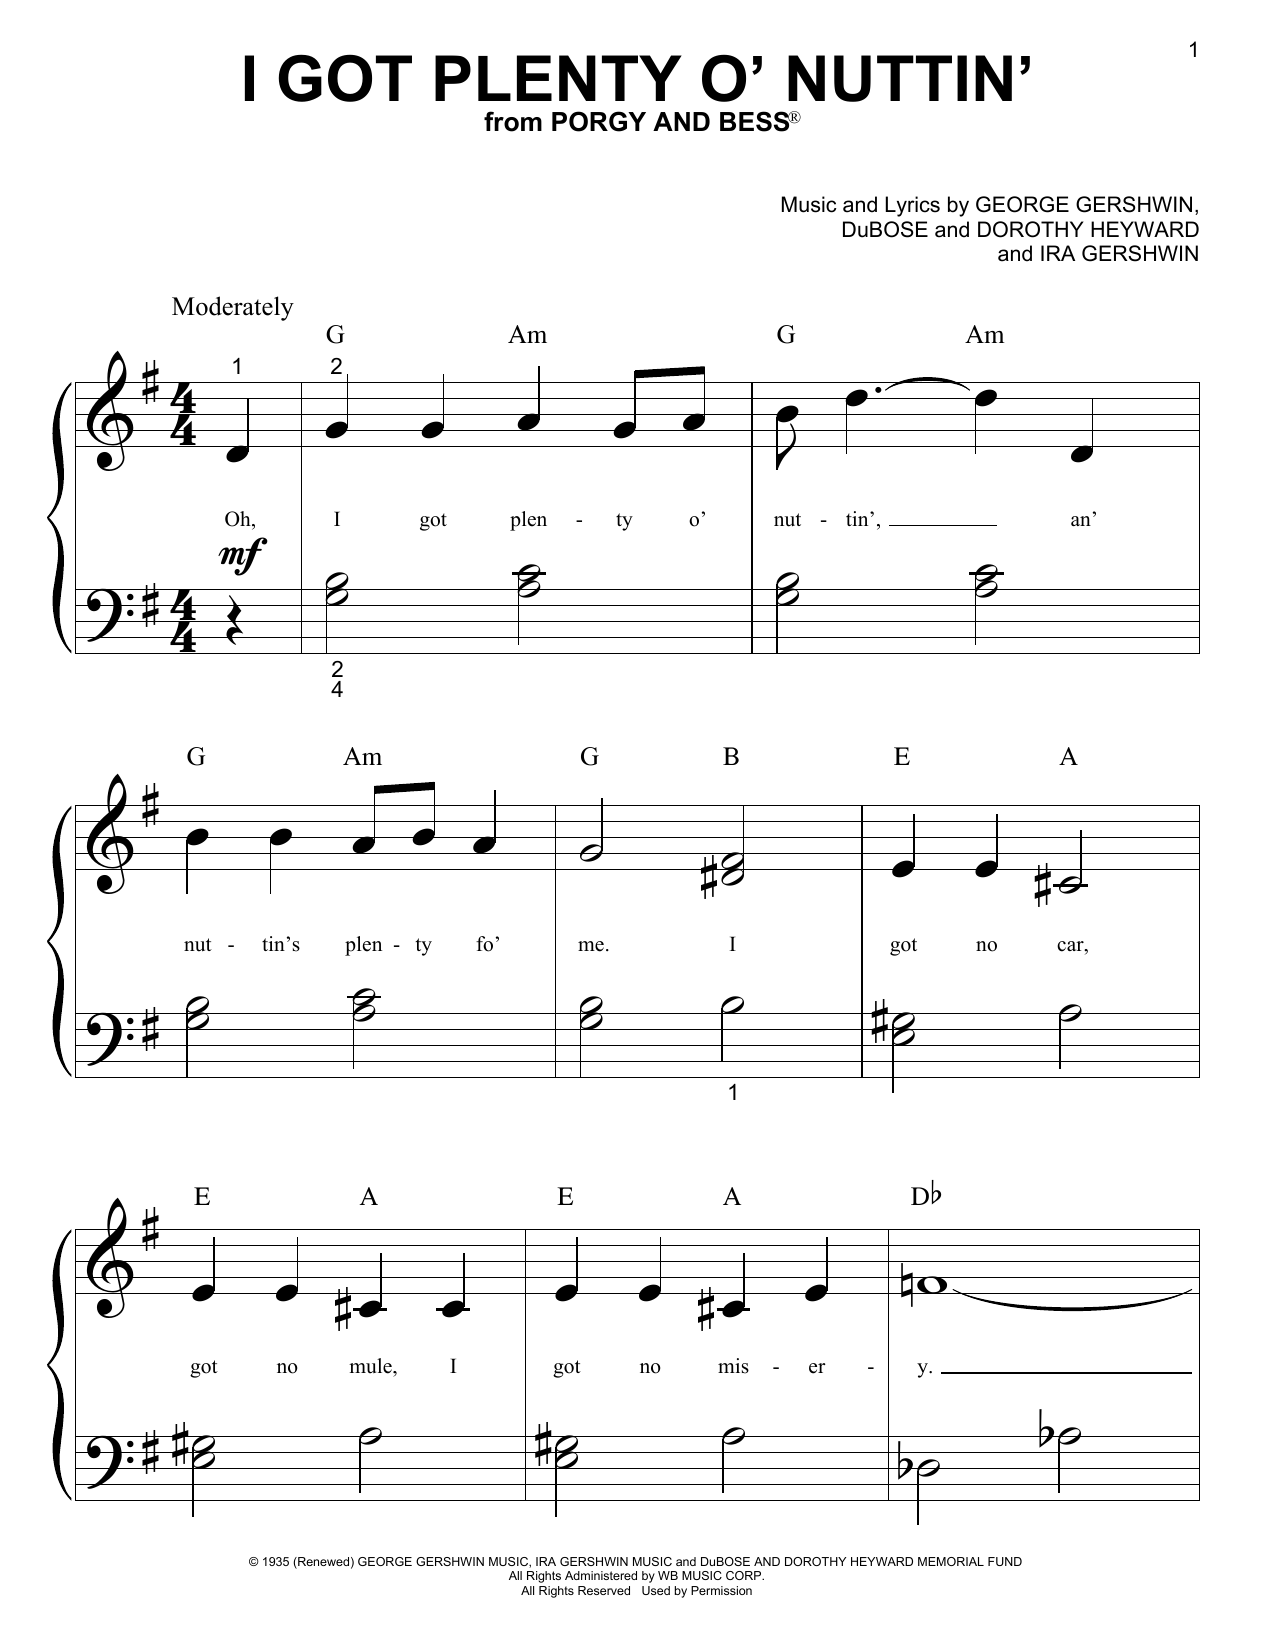 George Gershwin I Got Plenty O' Nuttin' Sheet Music Notes & Chords for Clarinet - Download or Print PDF